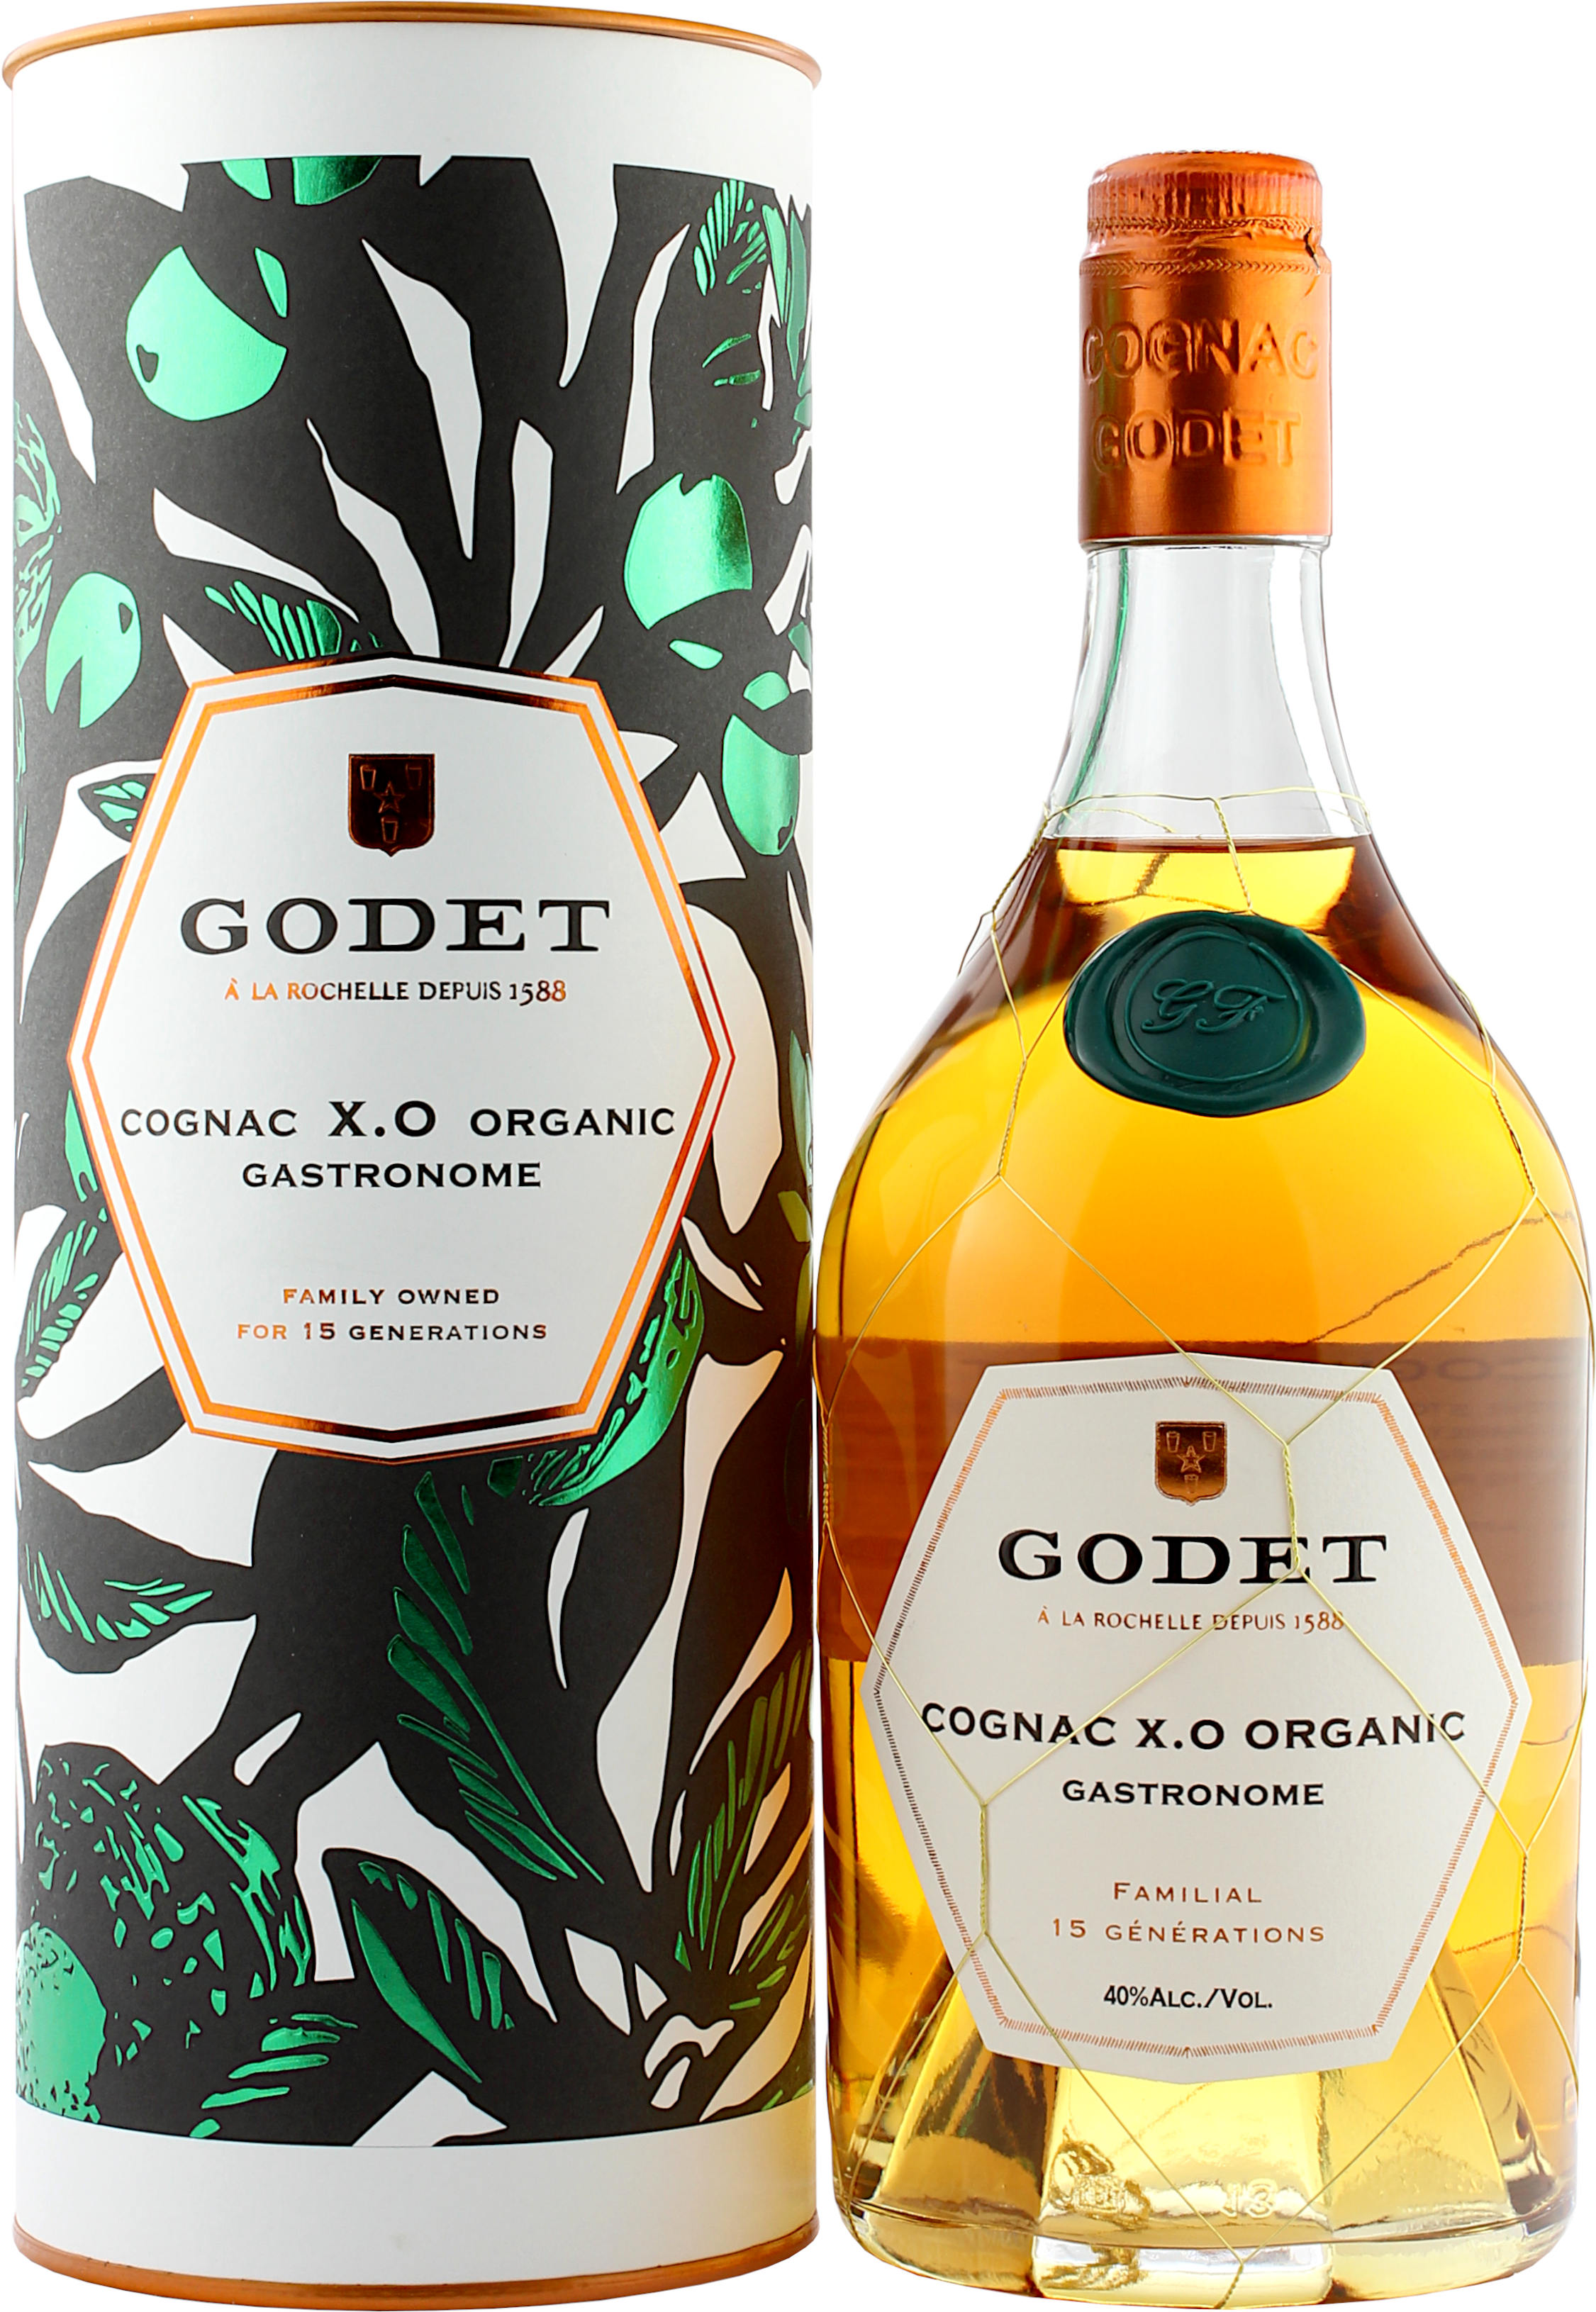 Godet Cognac XO Organic Gastronomie 40.0% 0,7l